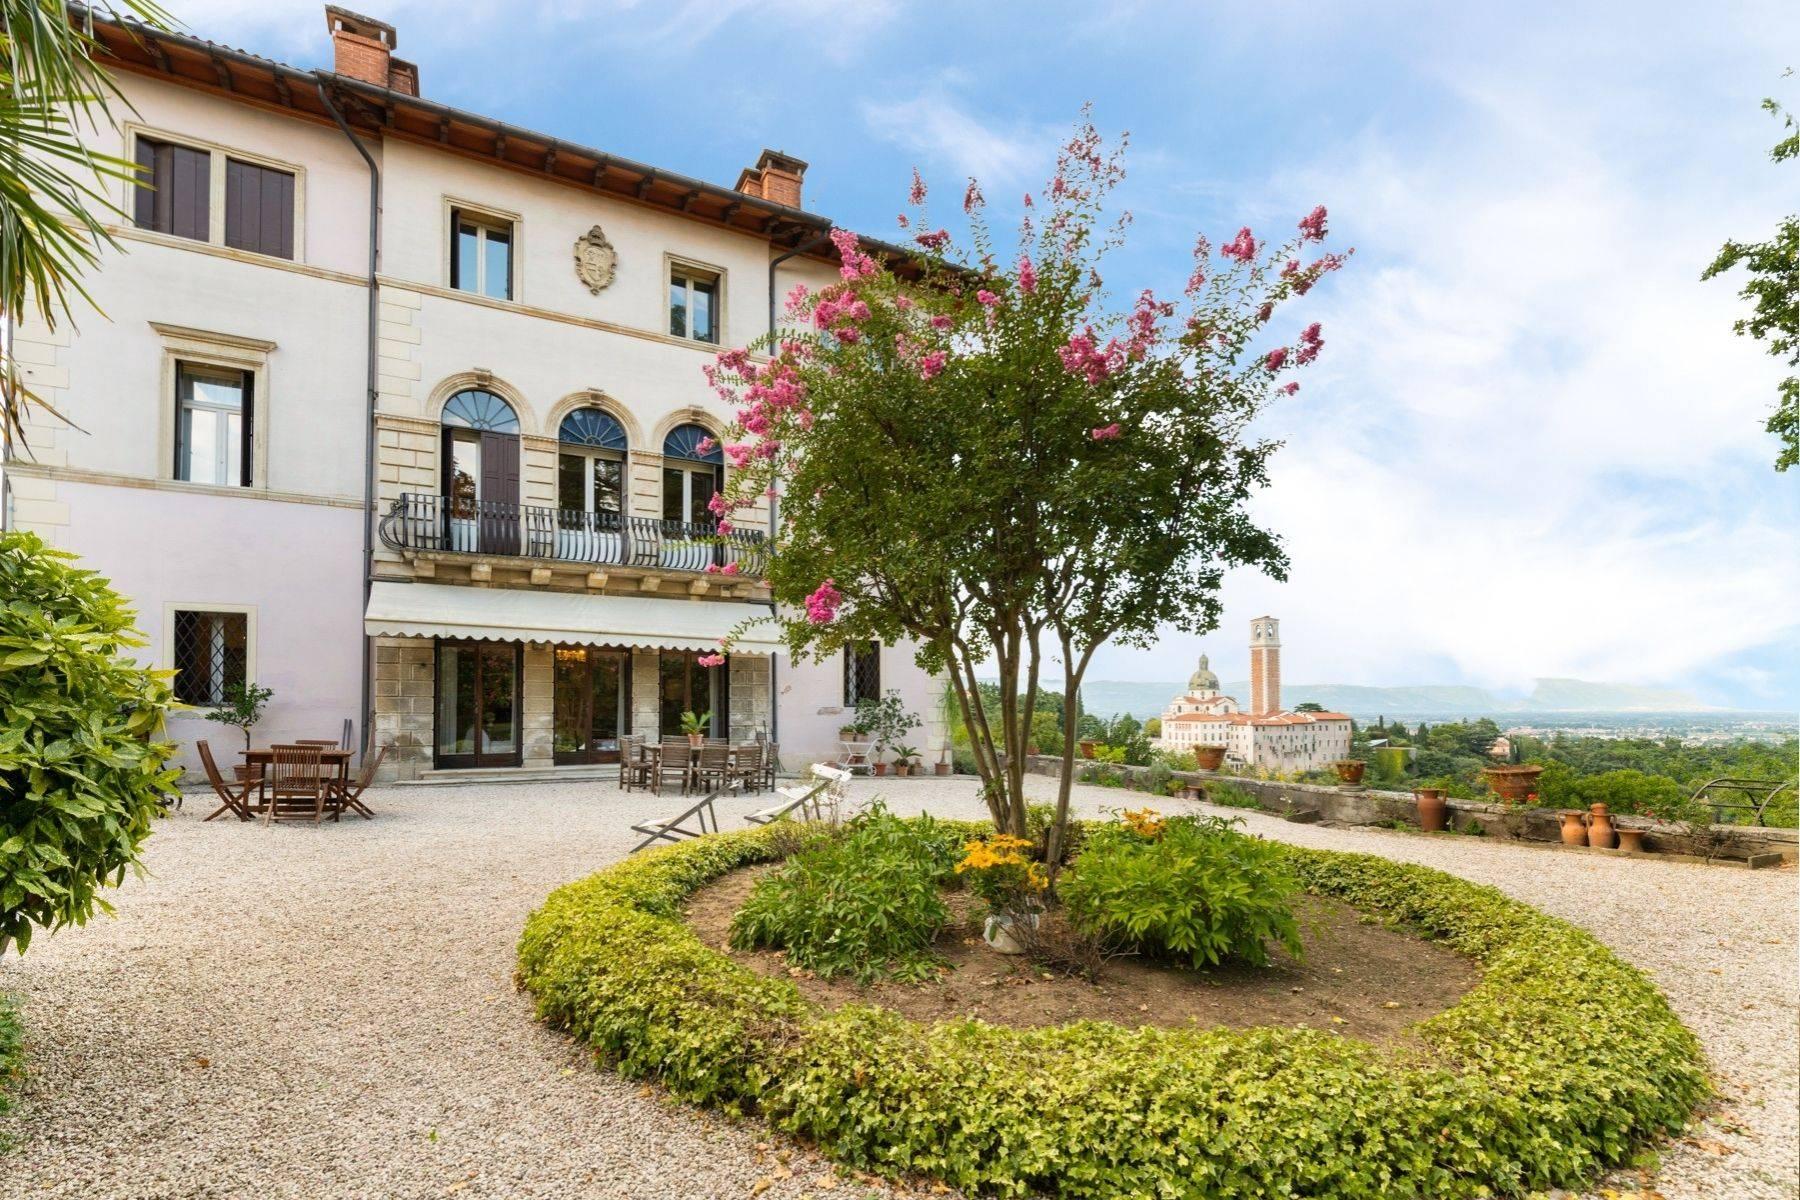 Elegant historic villa with private park on top of Monte Berico - 2